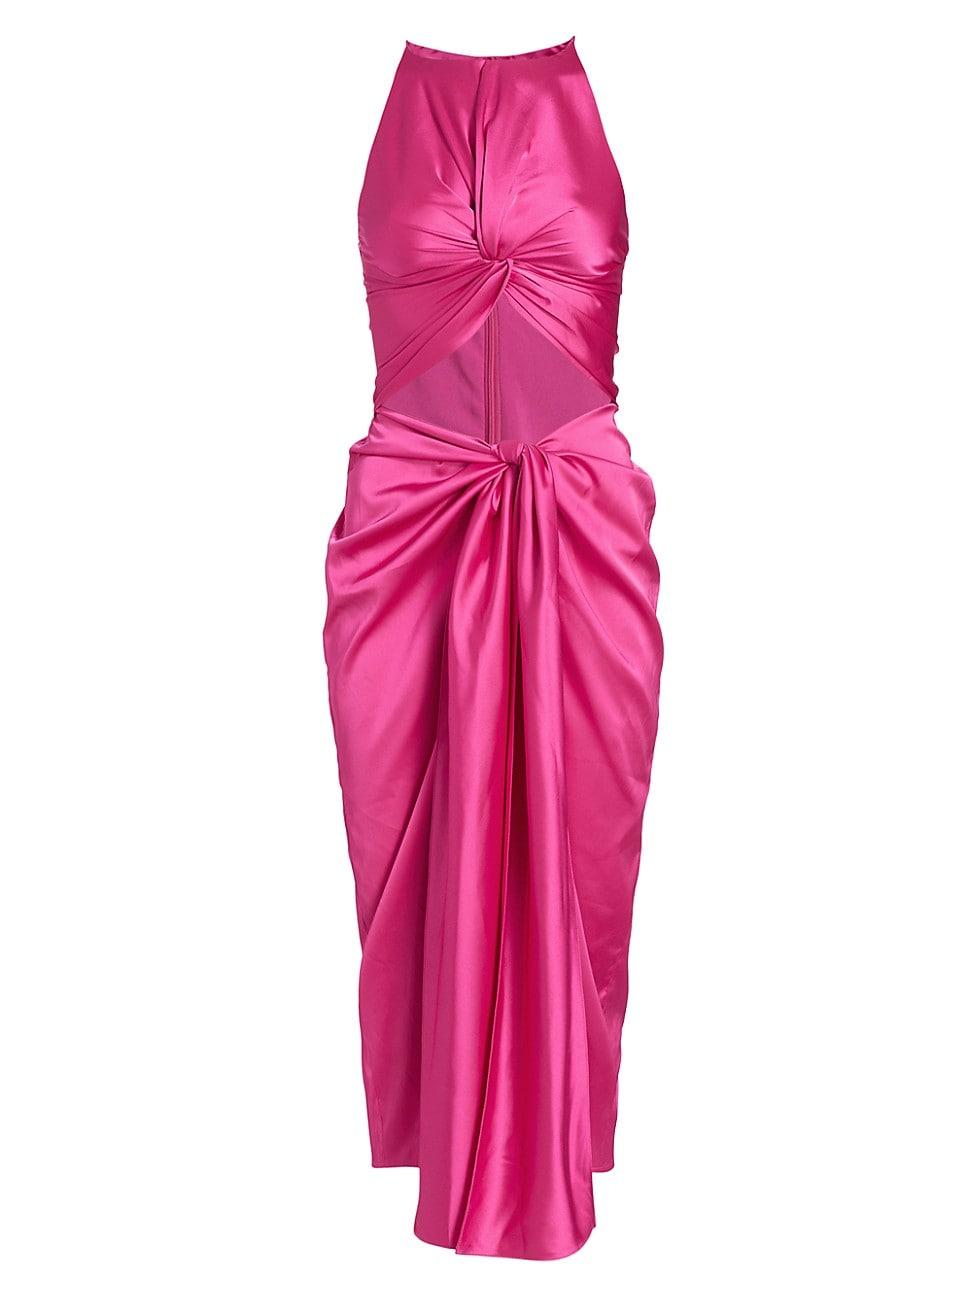 Andrea Iyamah Reni Satin Midi-dress in Pink | Lyst